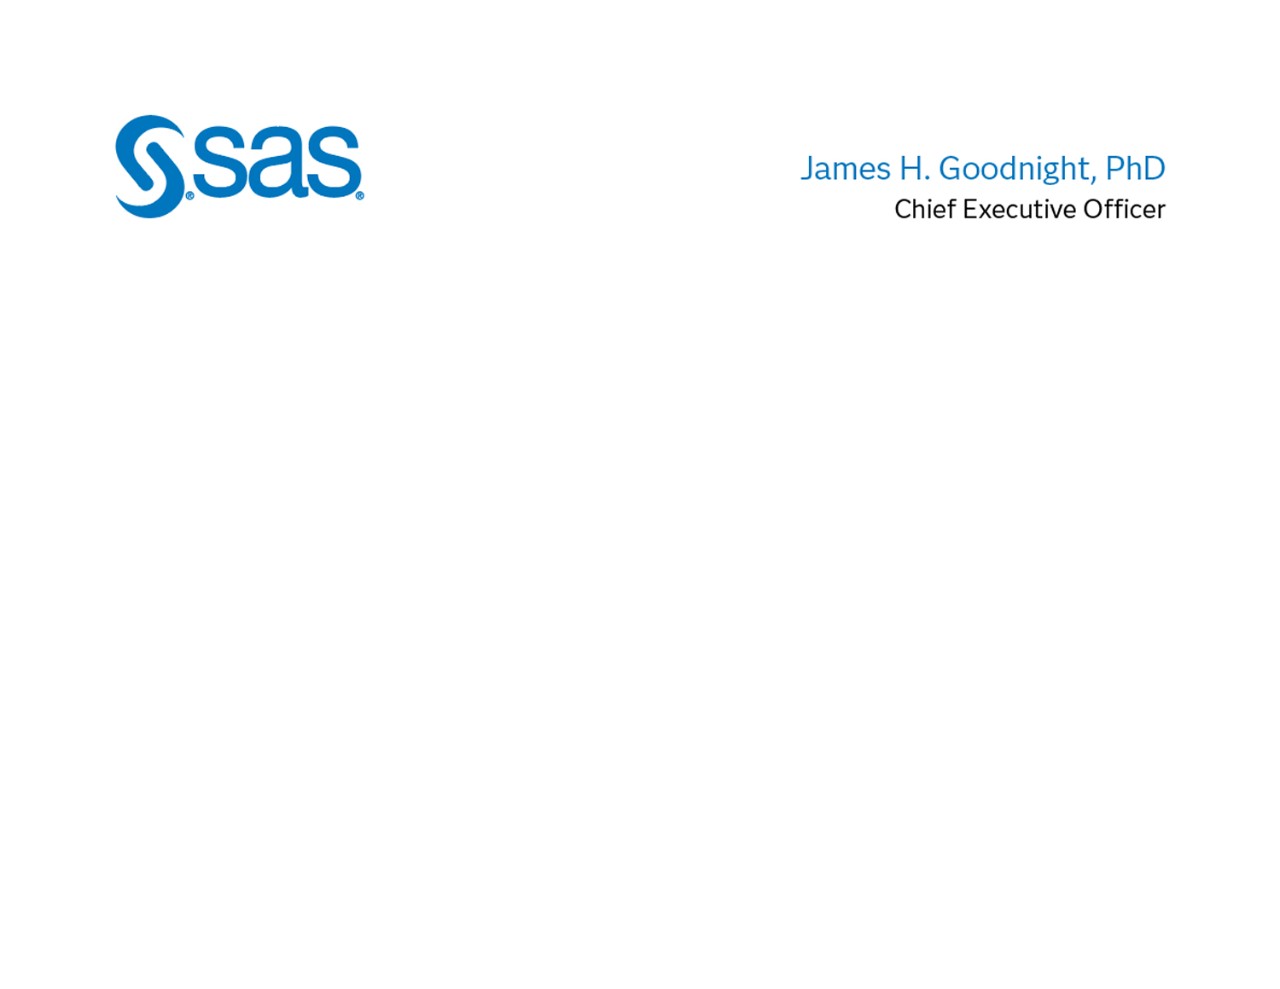 SAS Executive Notecard